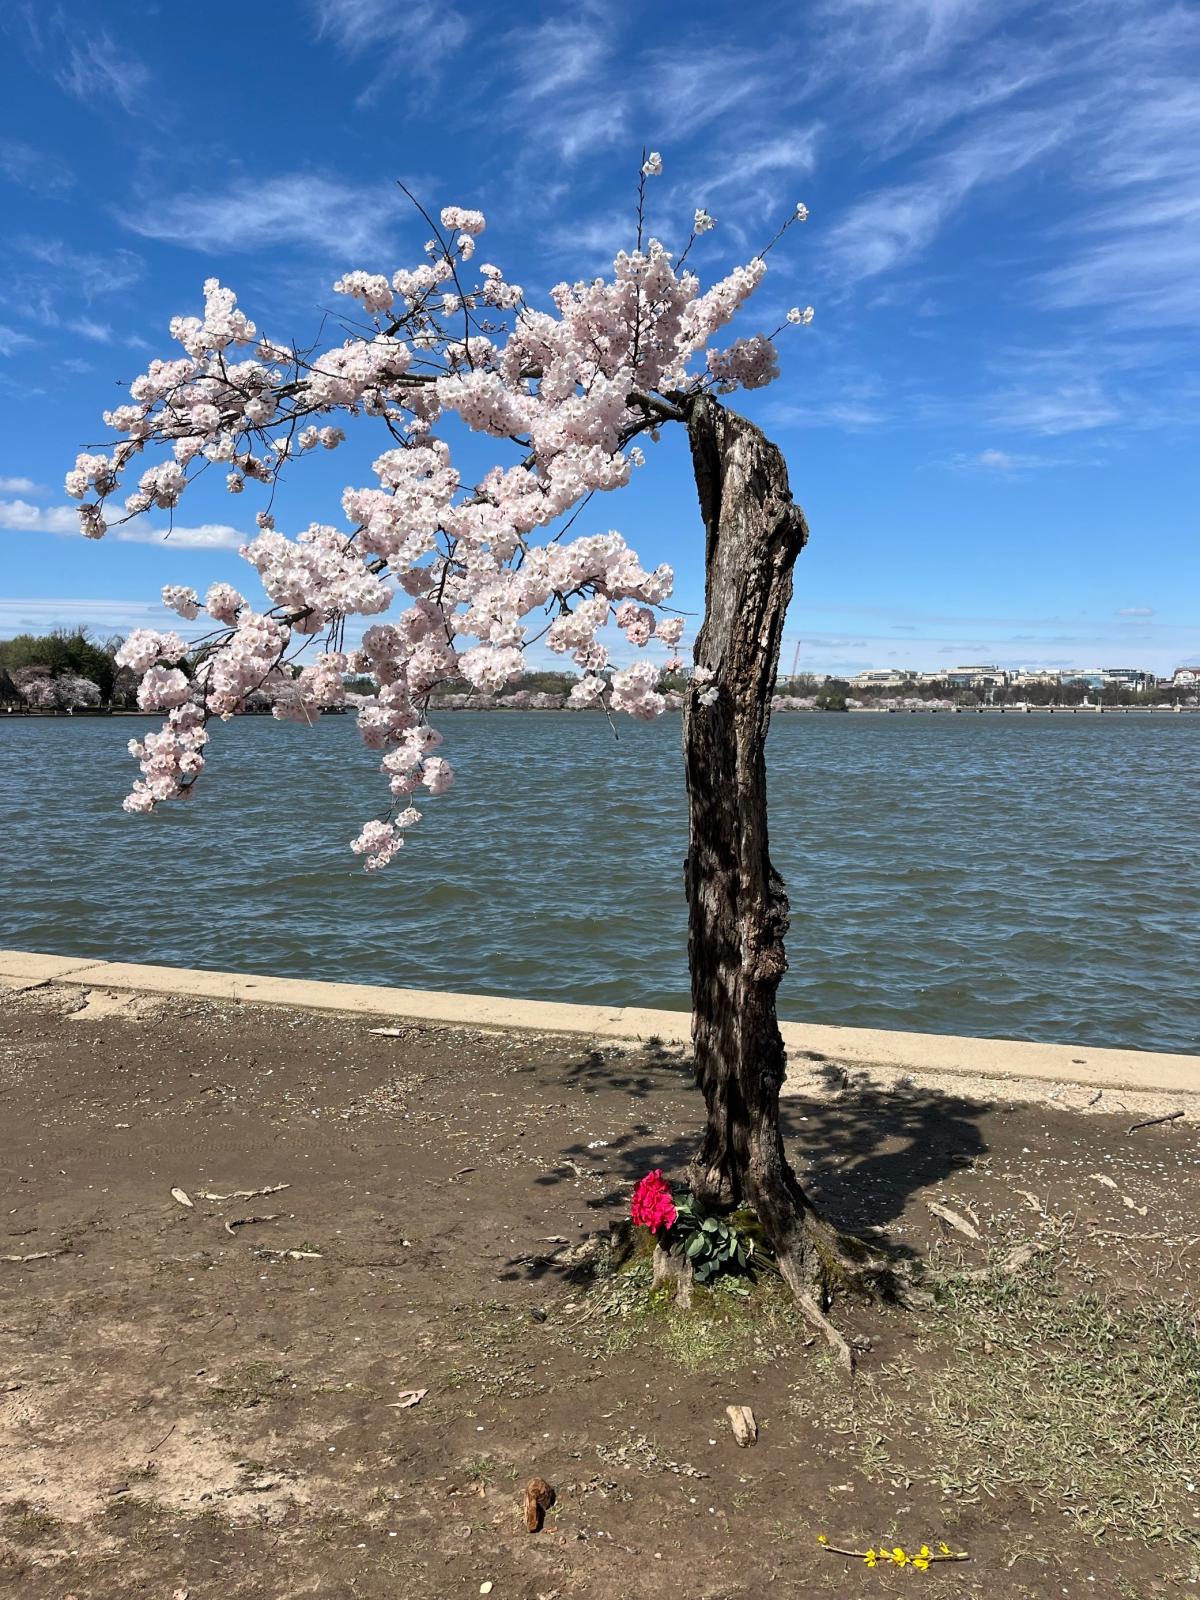 Saving ‘Stumpy’: How residents in Washington scramble to save this one cherry tree